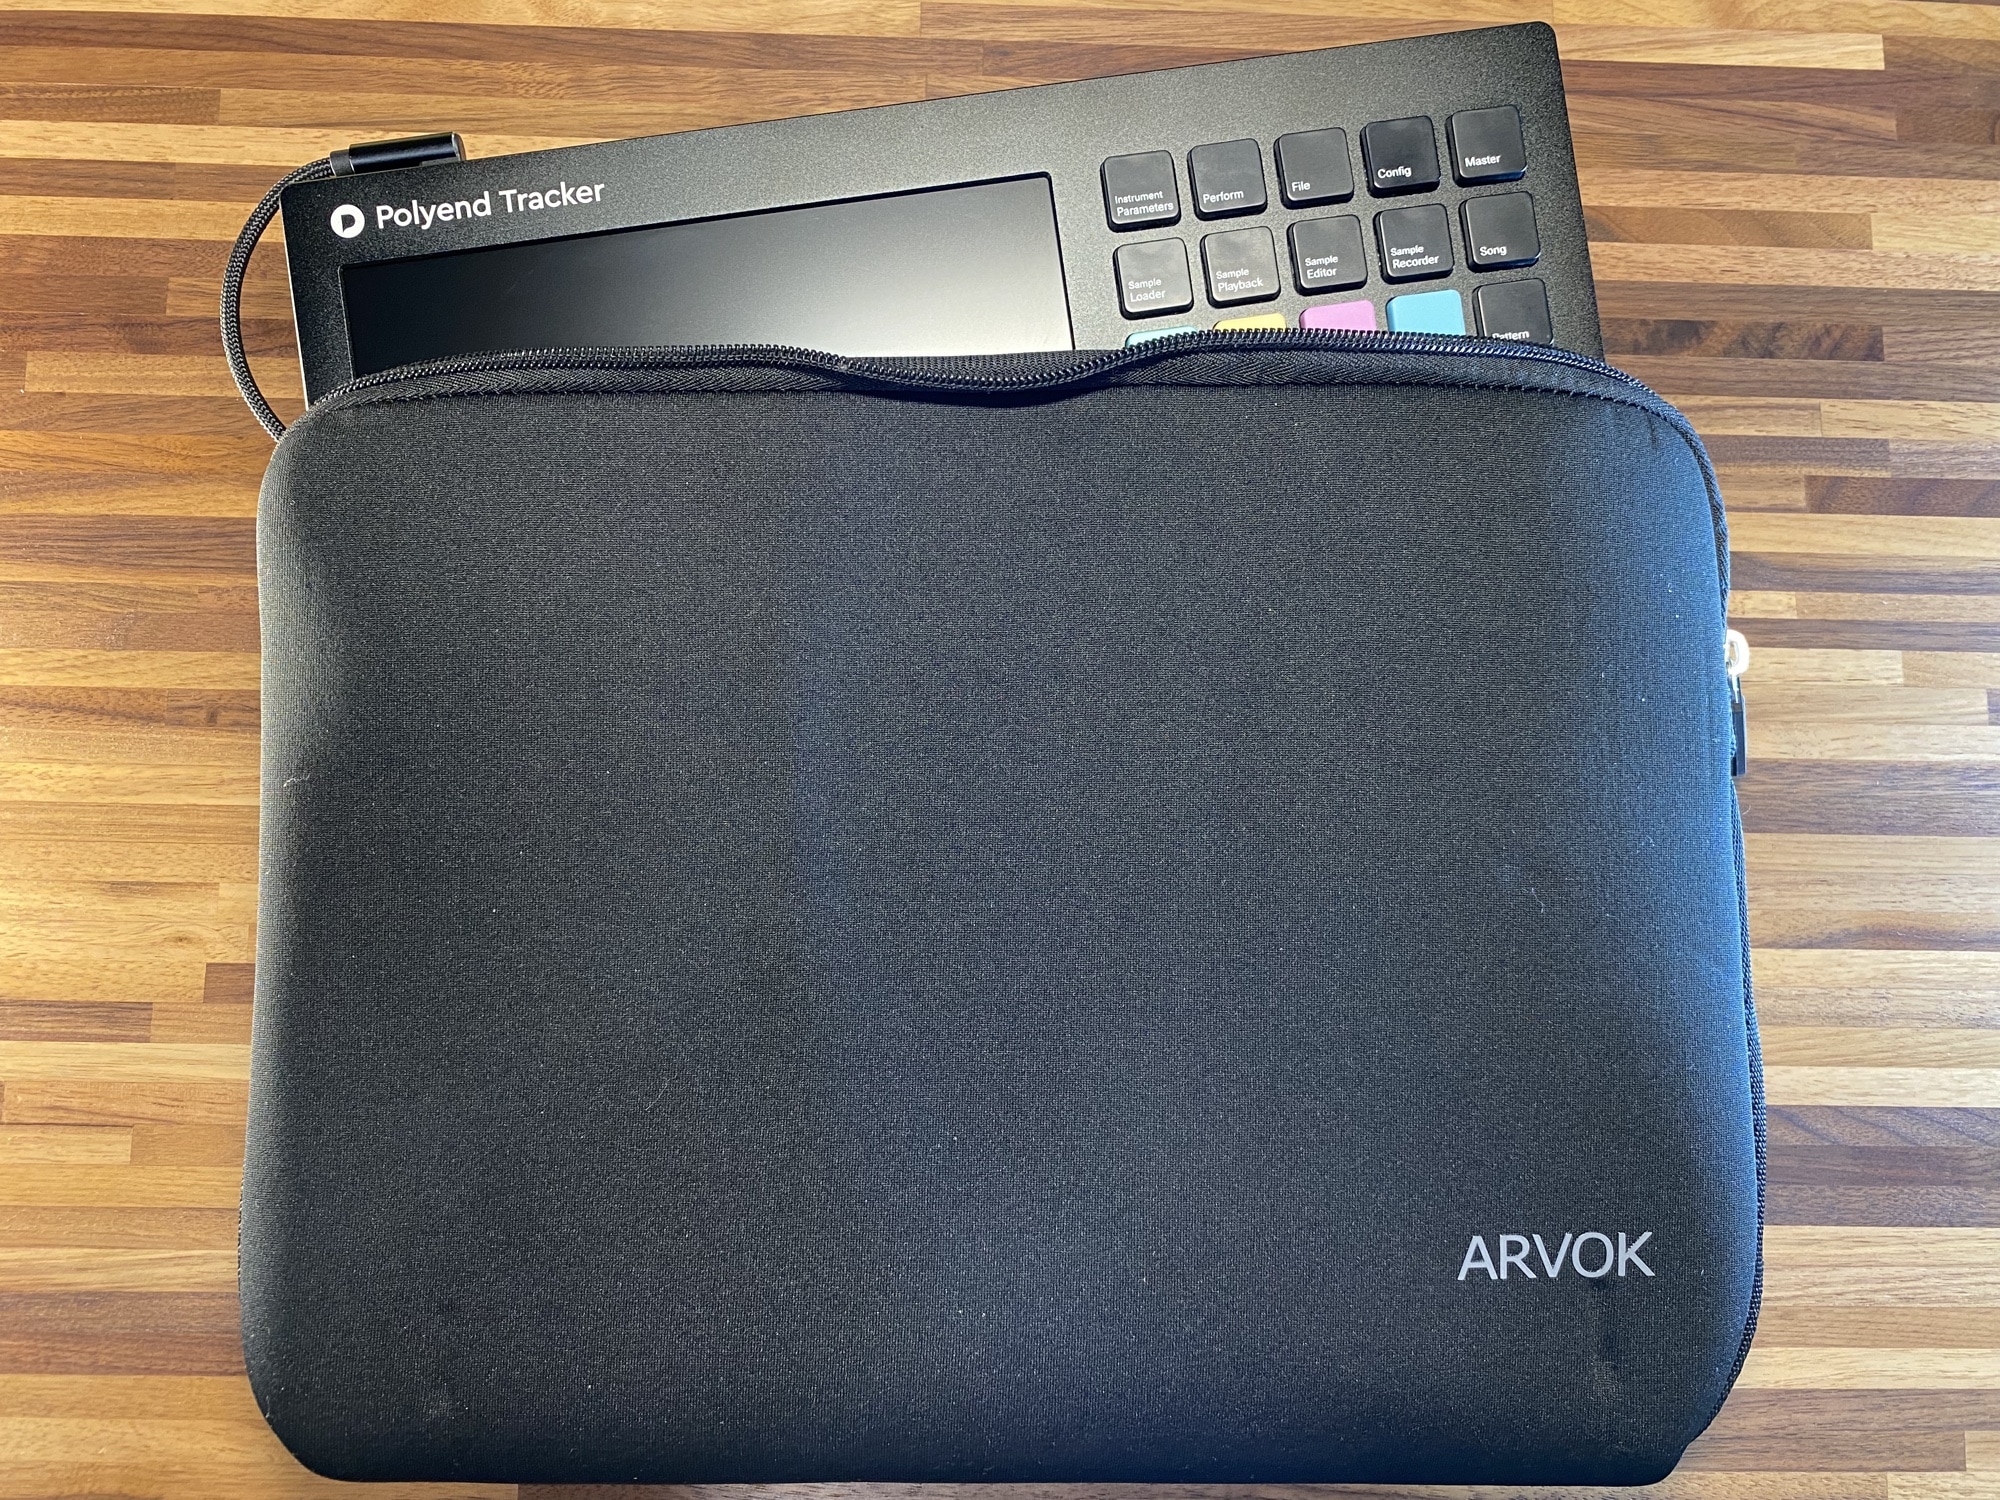 Polyend Tracker with accessories inside Arvok neoprene sleeve